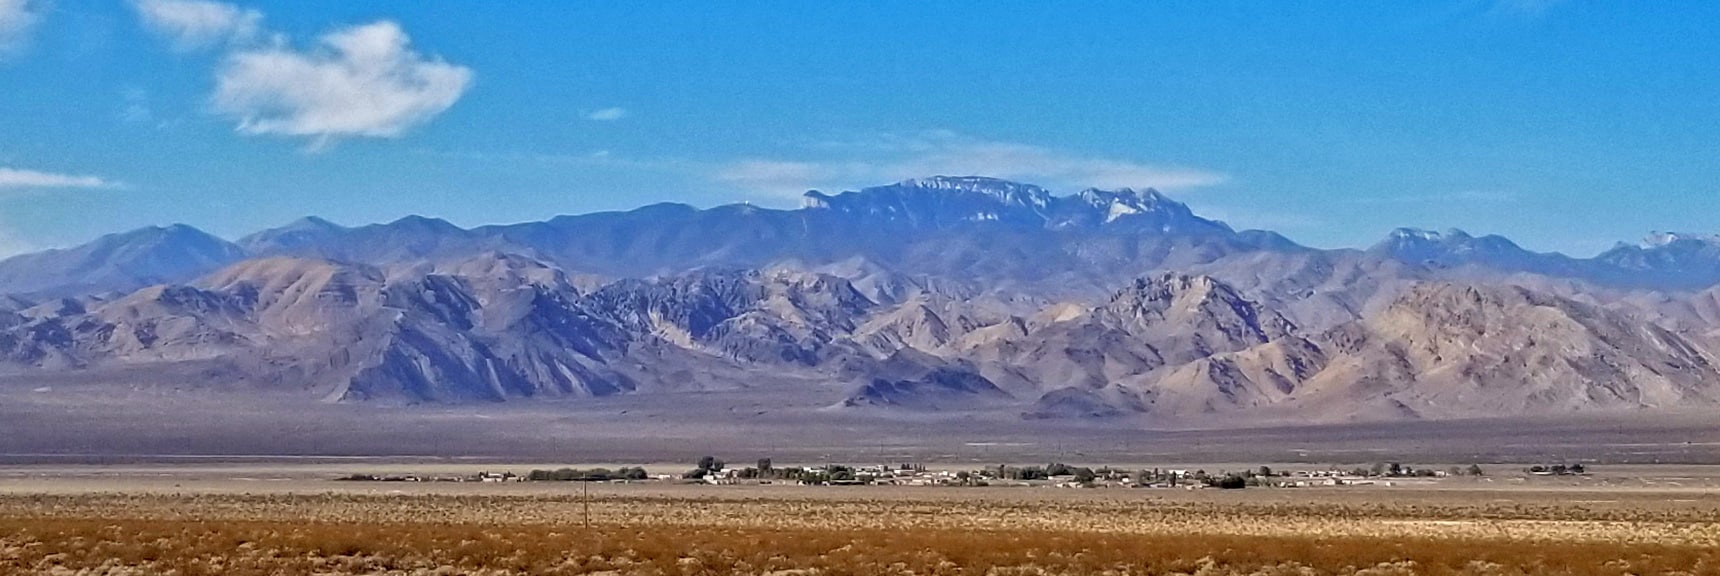 Griffith Peak, Harris Mountain, Fletcher Peak and Mummy Mountain | Smart Car Bike Rack and Mountain Bike Test, Sheep Range, Nevada